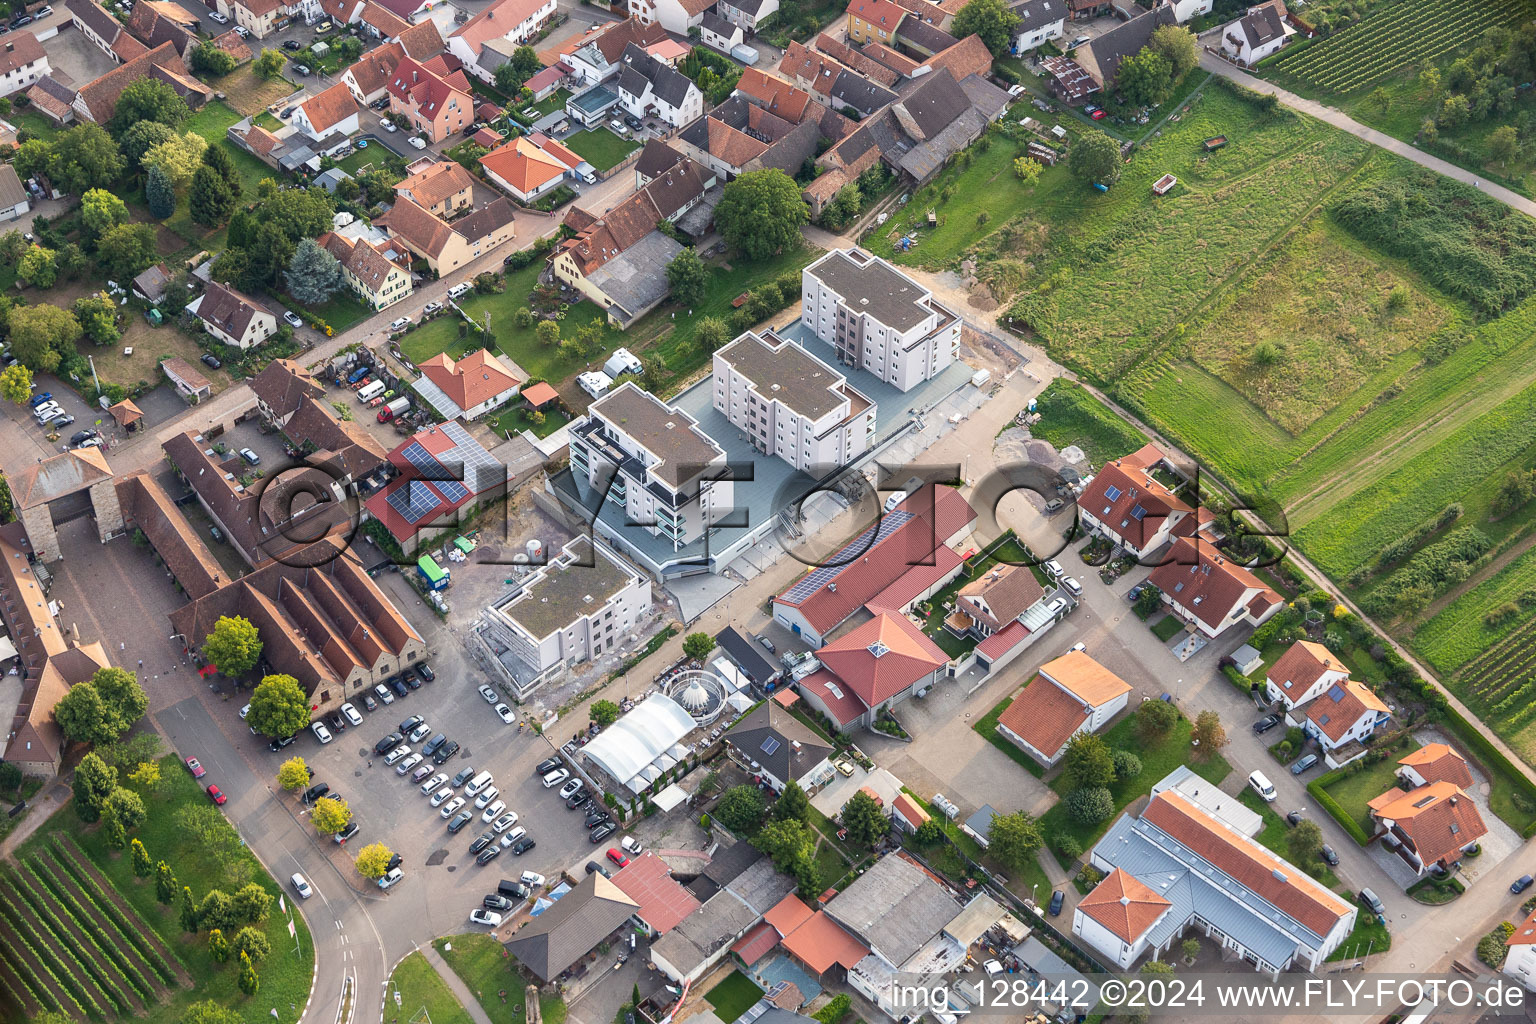 Aerial photograpy of New buildings on Silvanerstr in the district Schweigen in Schweigen-Rechtenbach in the state Rhineland-Palatinate, Germany